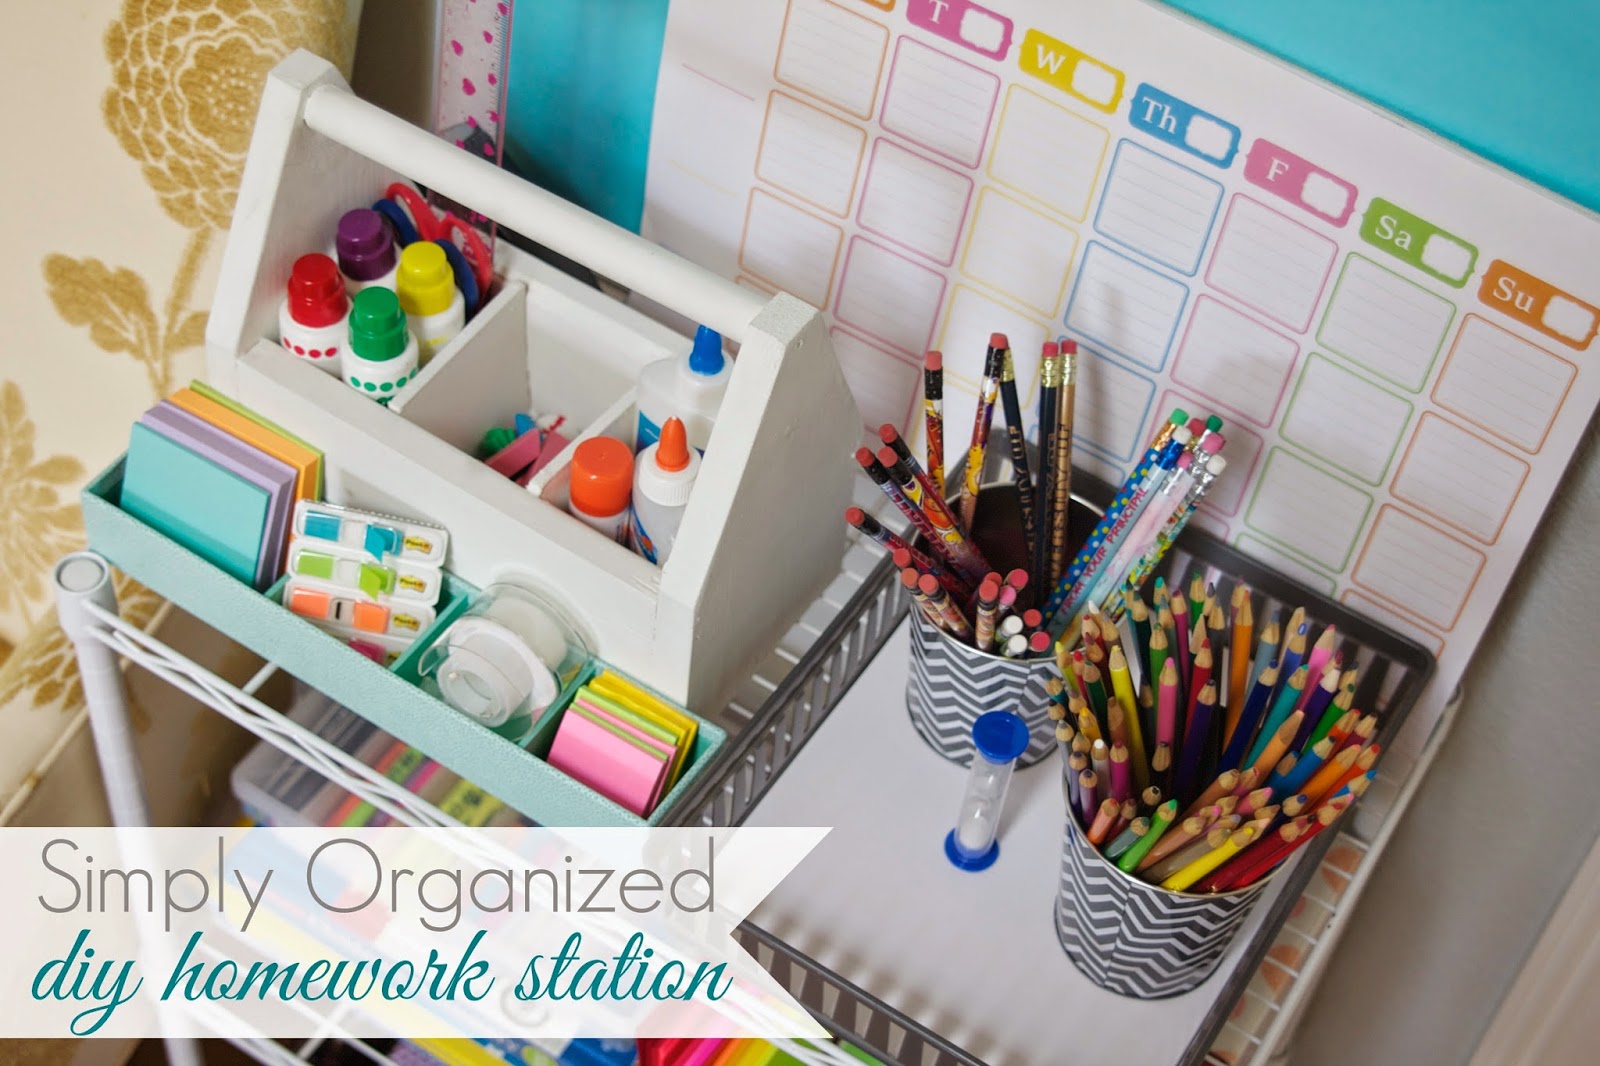 An organized area for school supplies makes homework a breeze